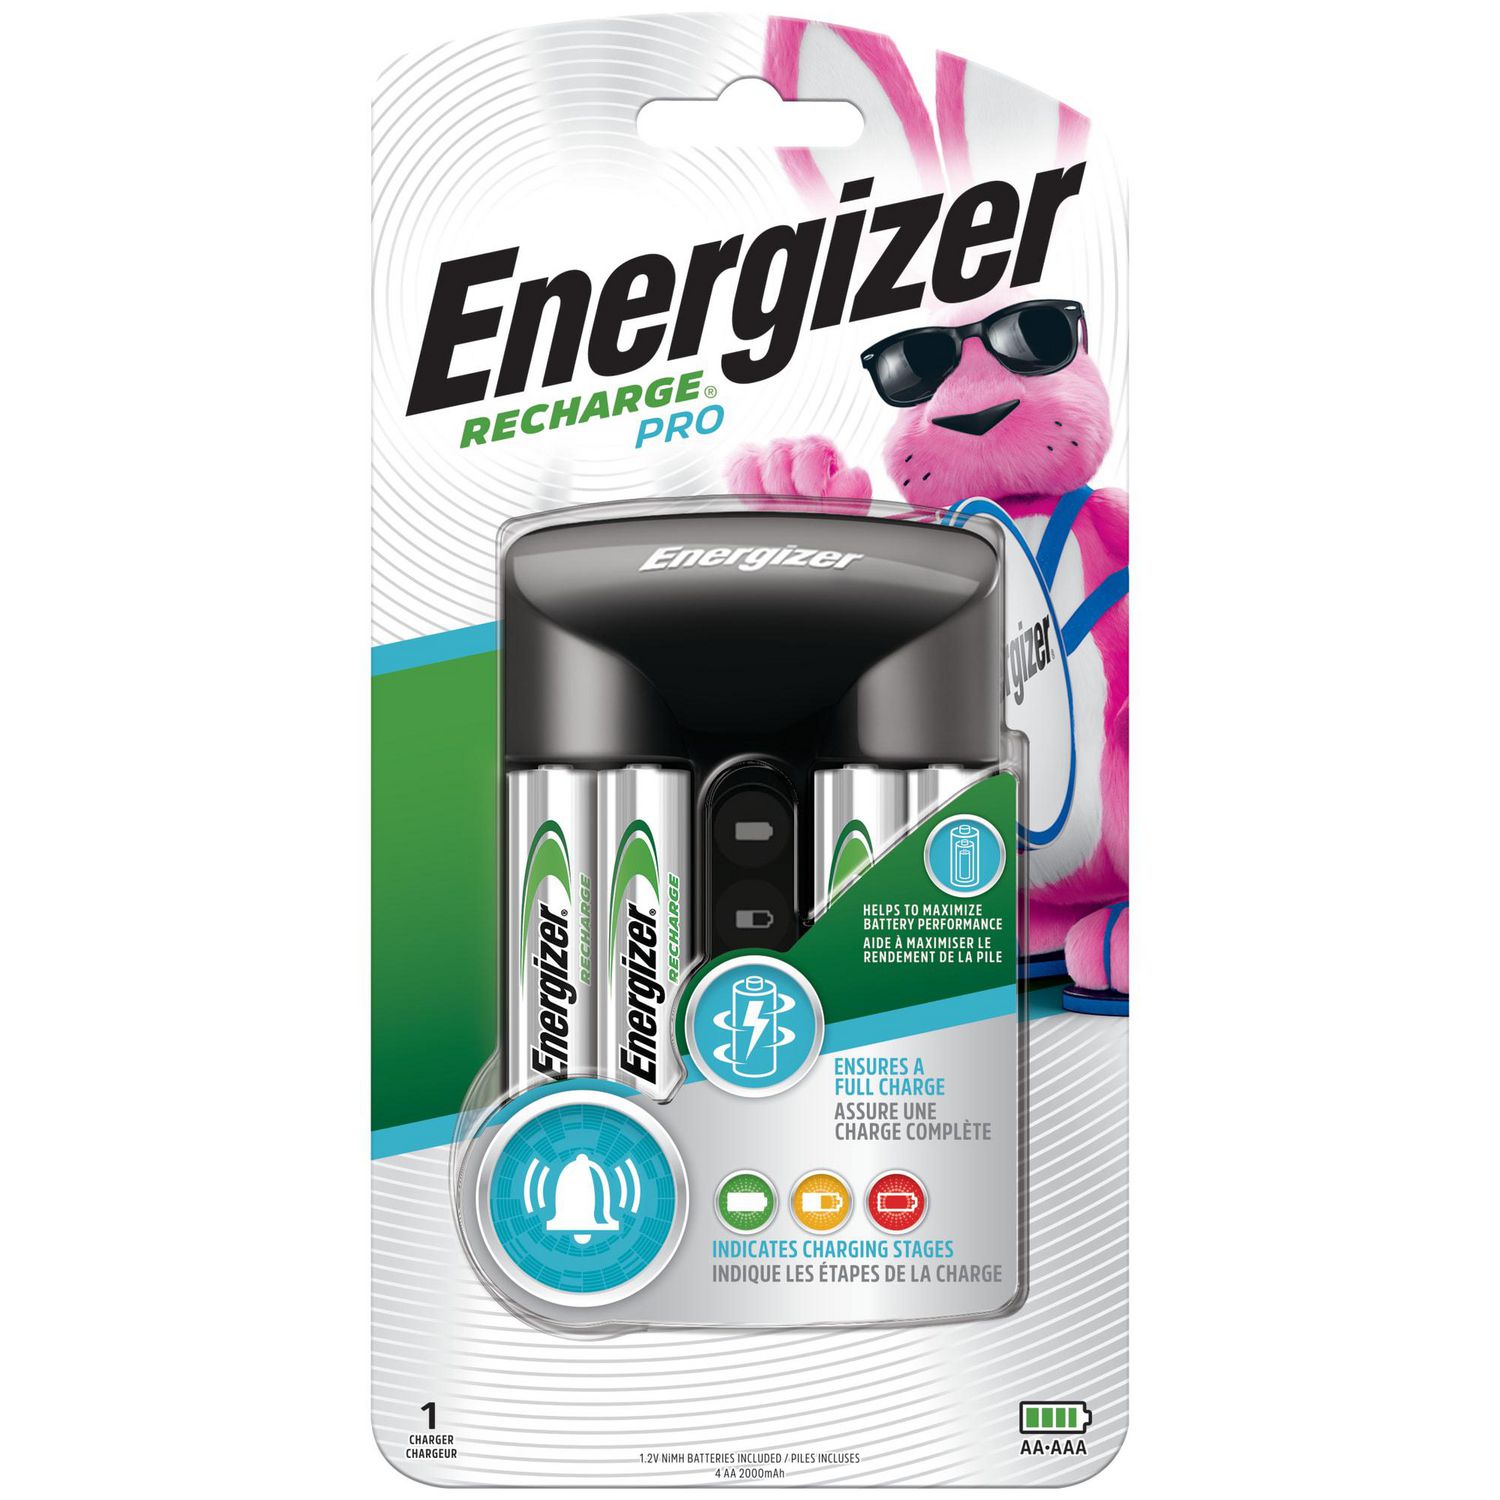 Chargeur Energizer Recharge Pro pour piles NiMH rechargeables AA